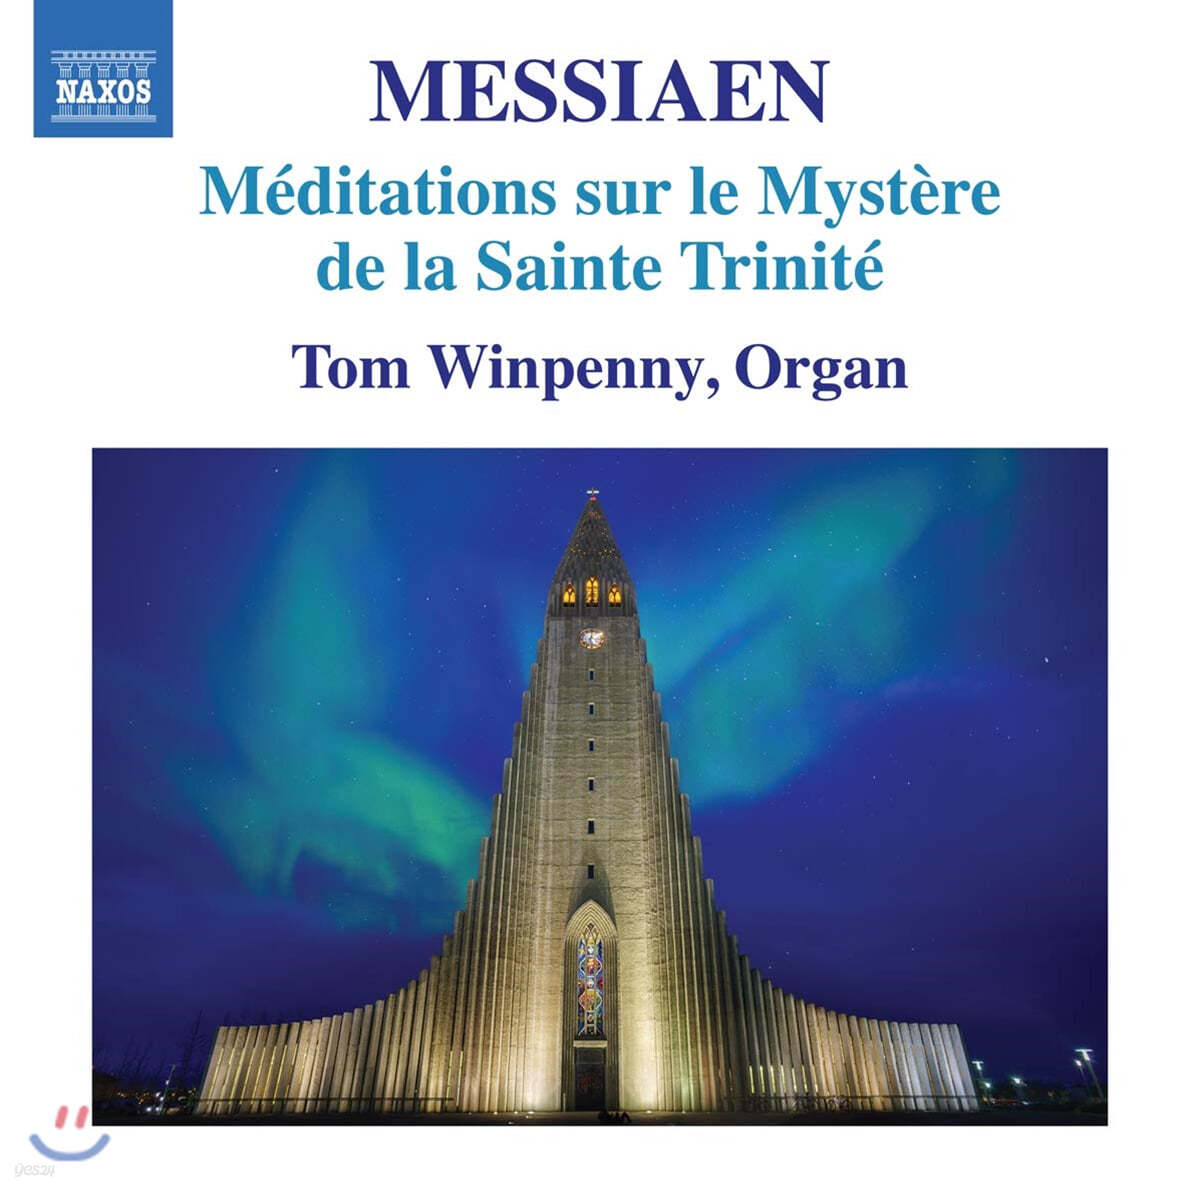 Tom Winpenny 메시앙: 성 삼위일체의 신비에 관한 명상 (Messiaen: Me ditations sur le mystere de la Sainte Trinite)